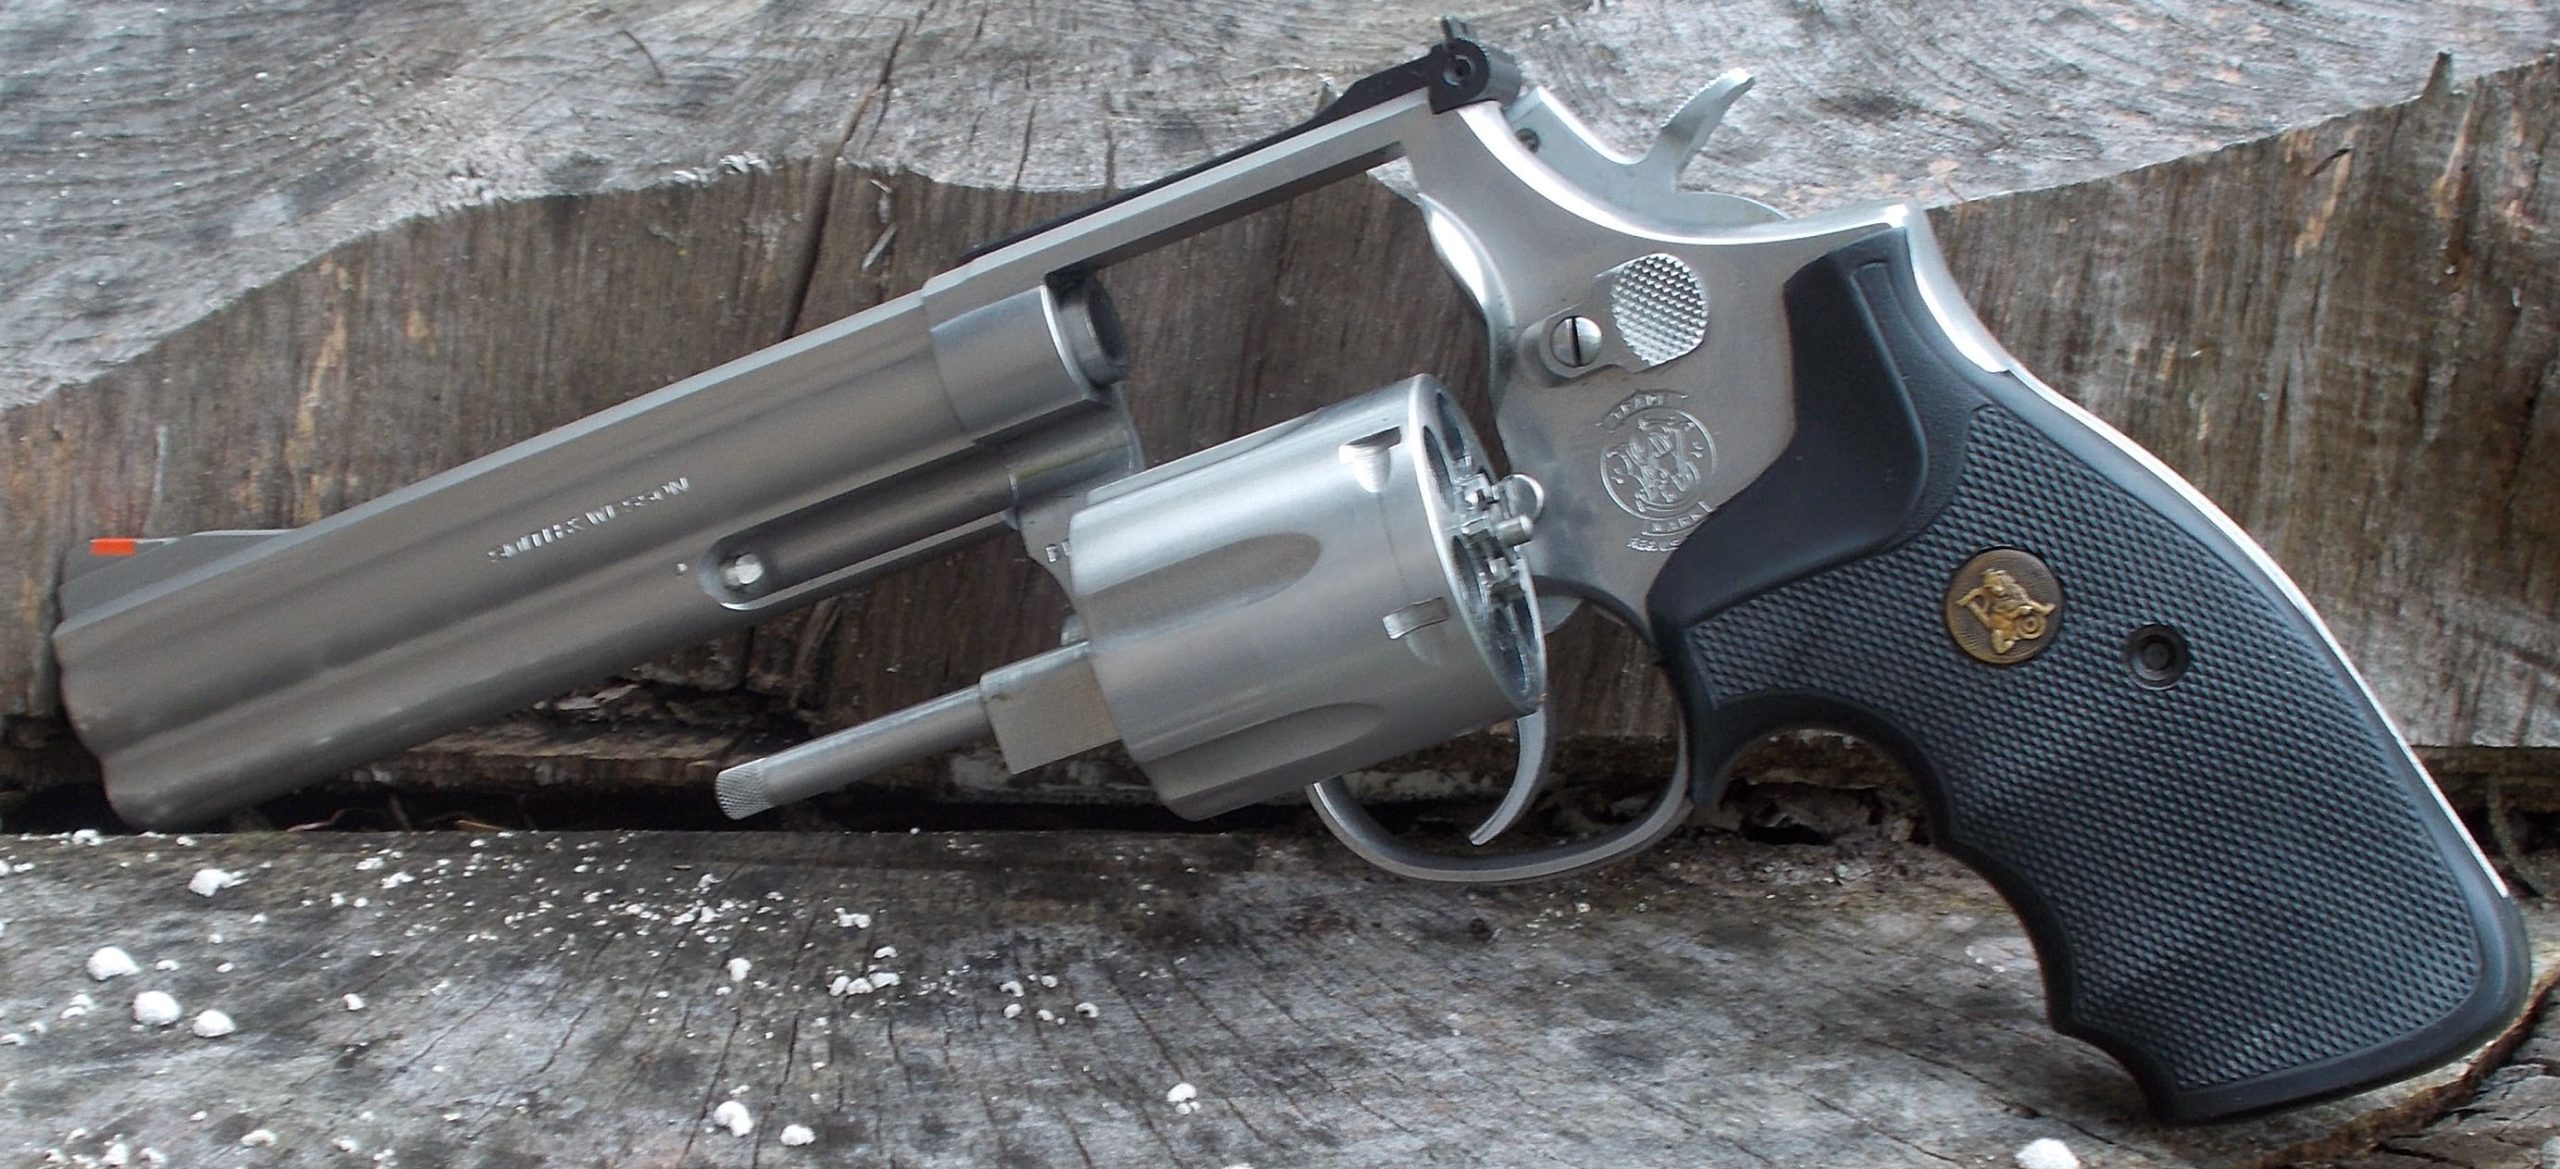 SLIKA 3. Konstruisan i napravljen kao tenk opte namene, ovaj klasini revolver e jo dugo uspevati da prui zavidno zadovoljstvo svakome ko ga koristi.jpg